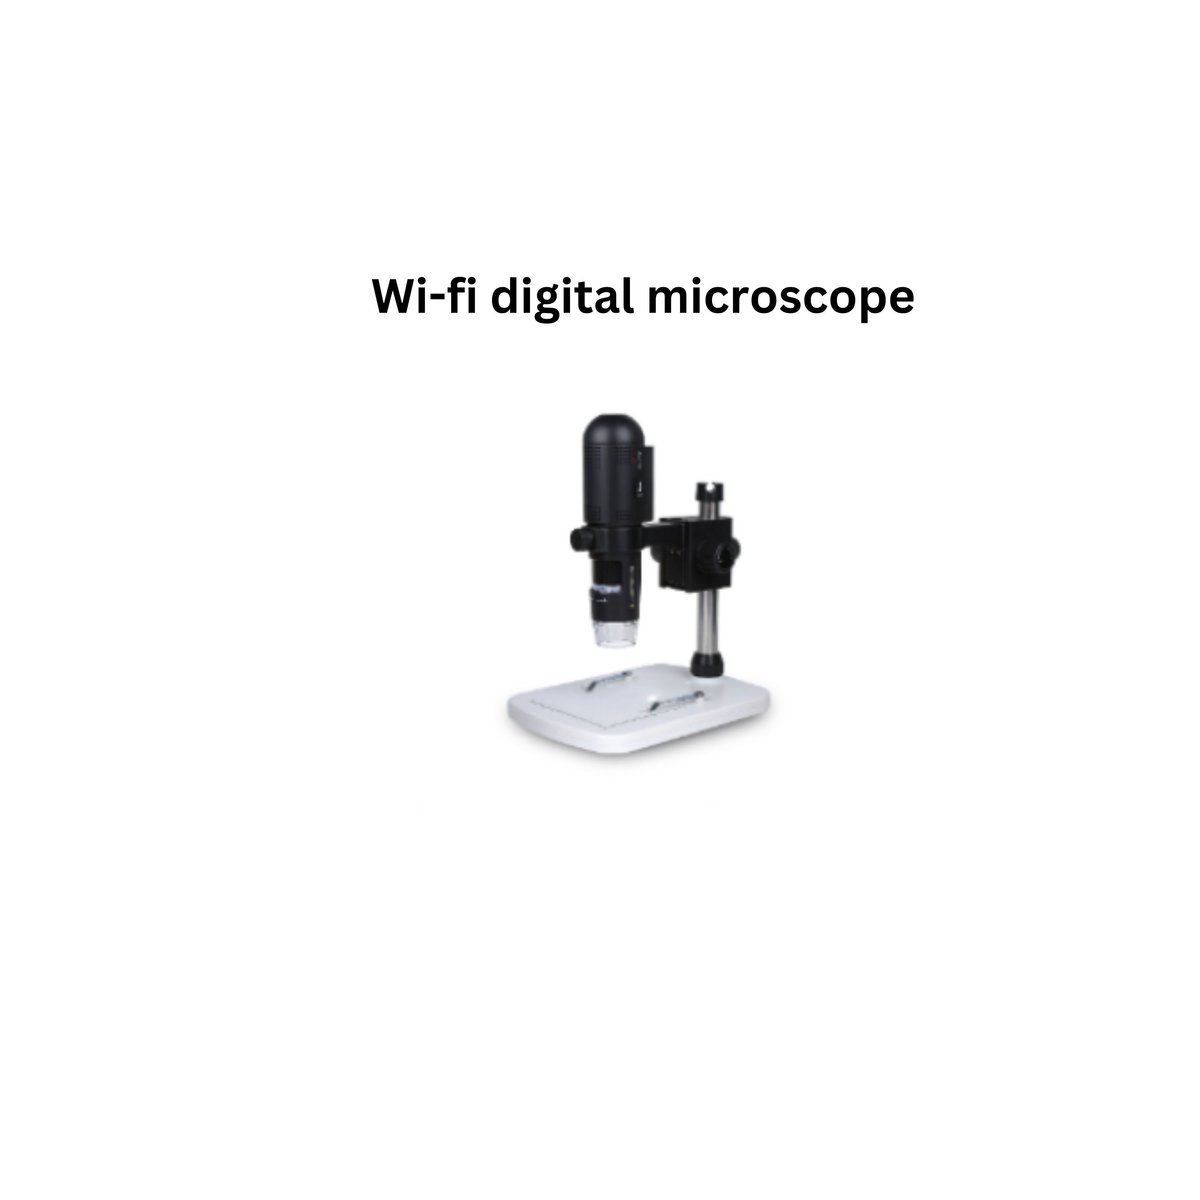 Wi-fi digital microscope.jpg